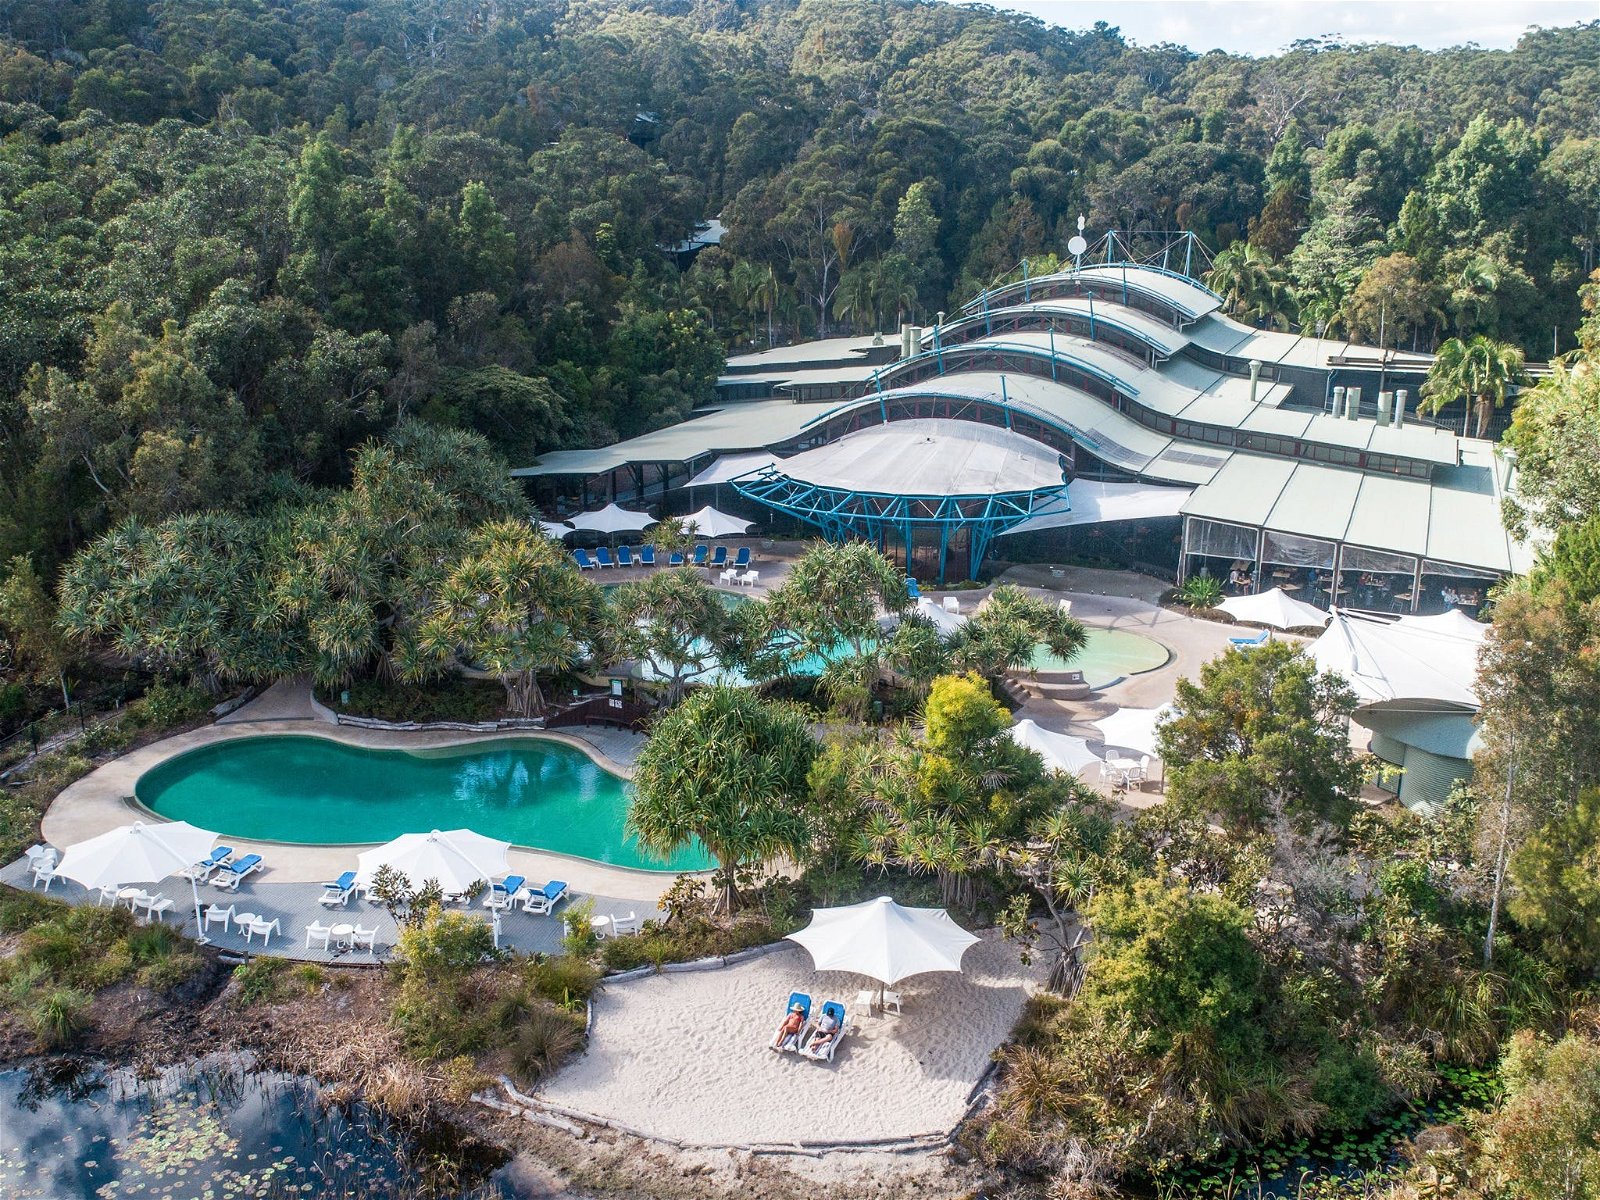  Tourism Canberra